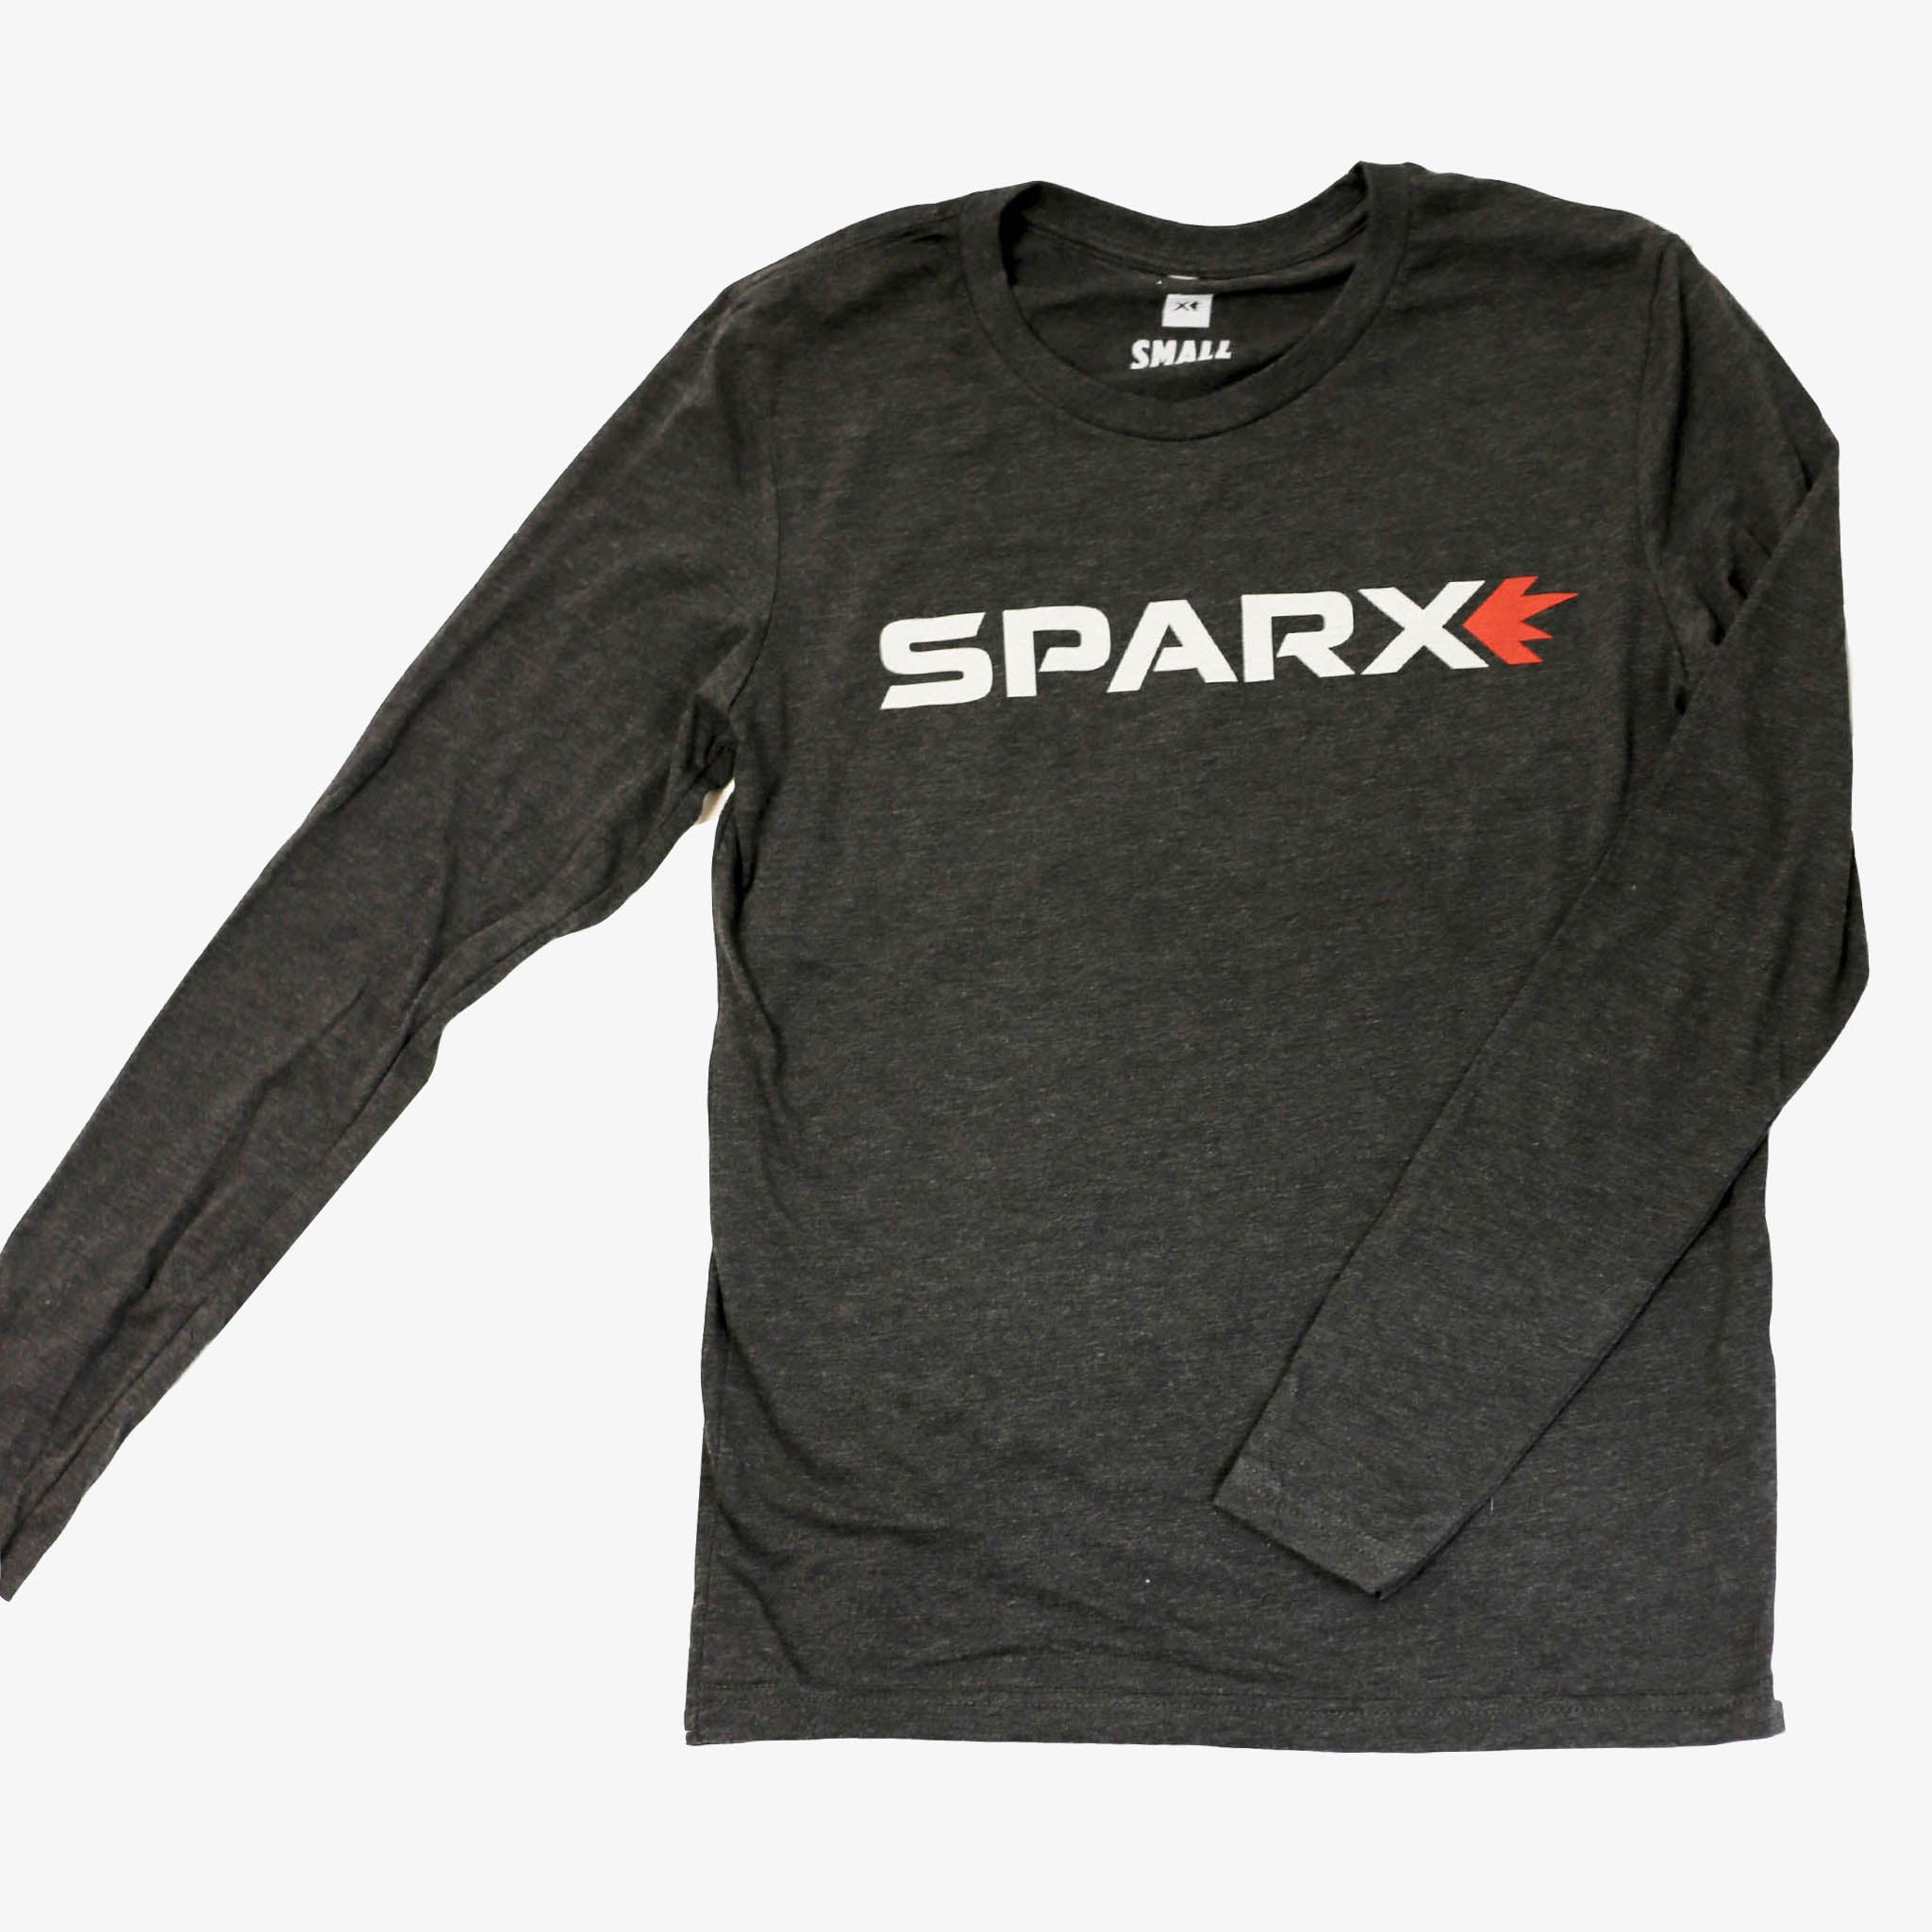 Pánské triko s dlouhým rukávem a logem Sparx